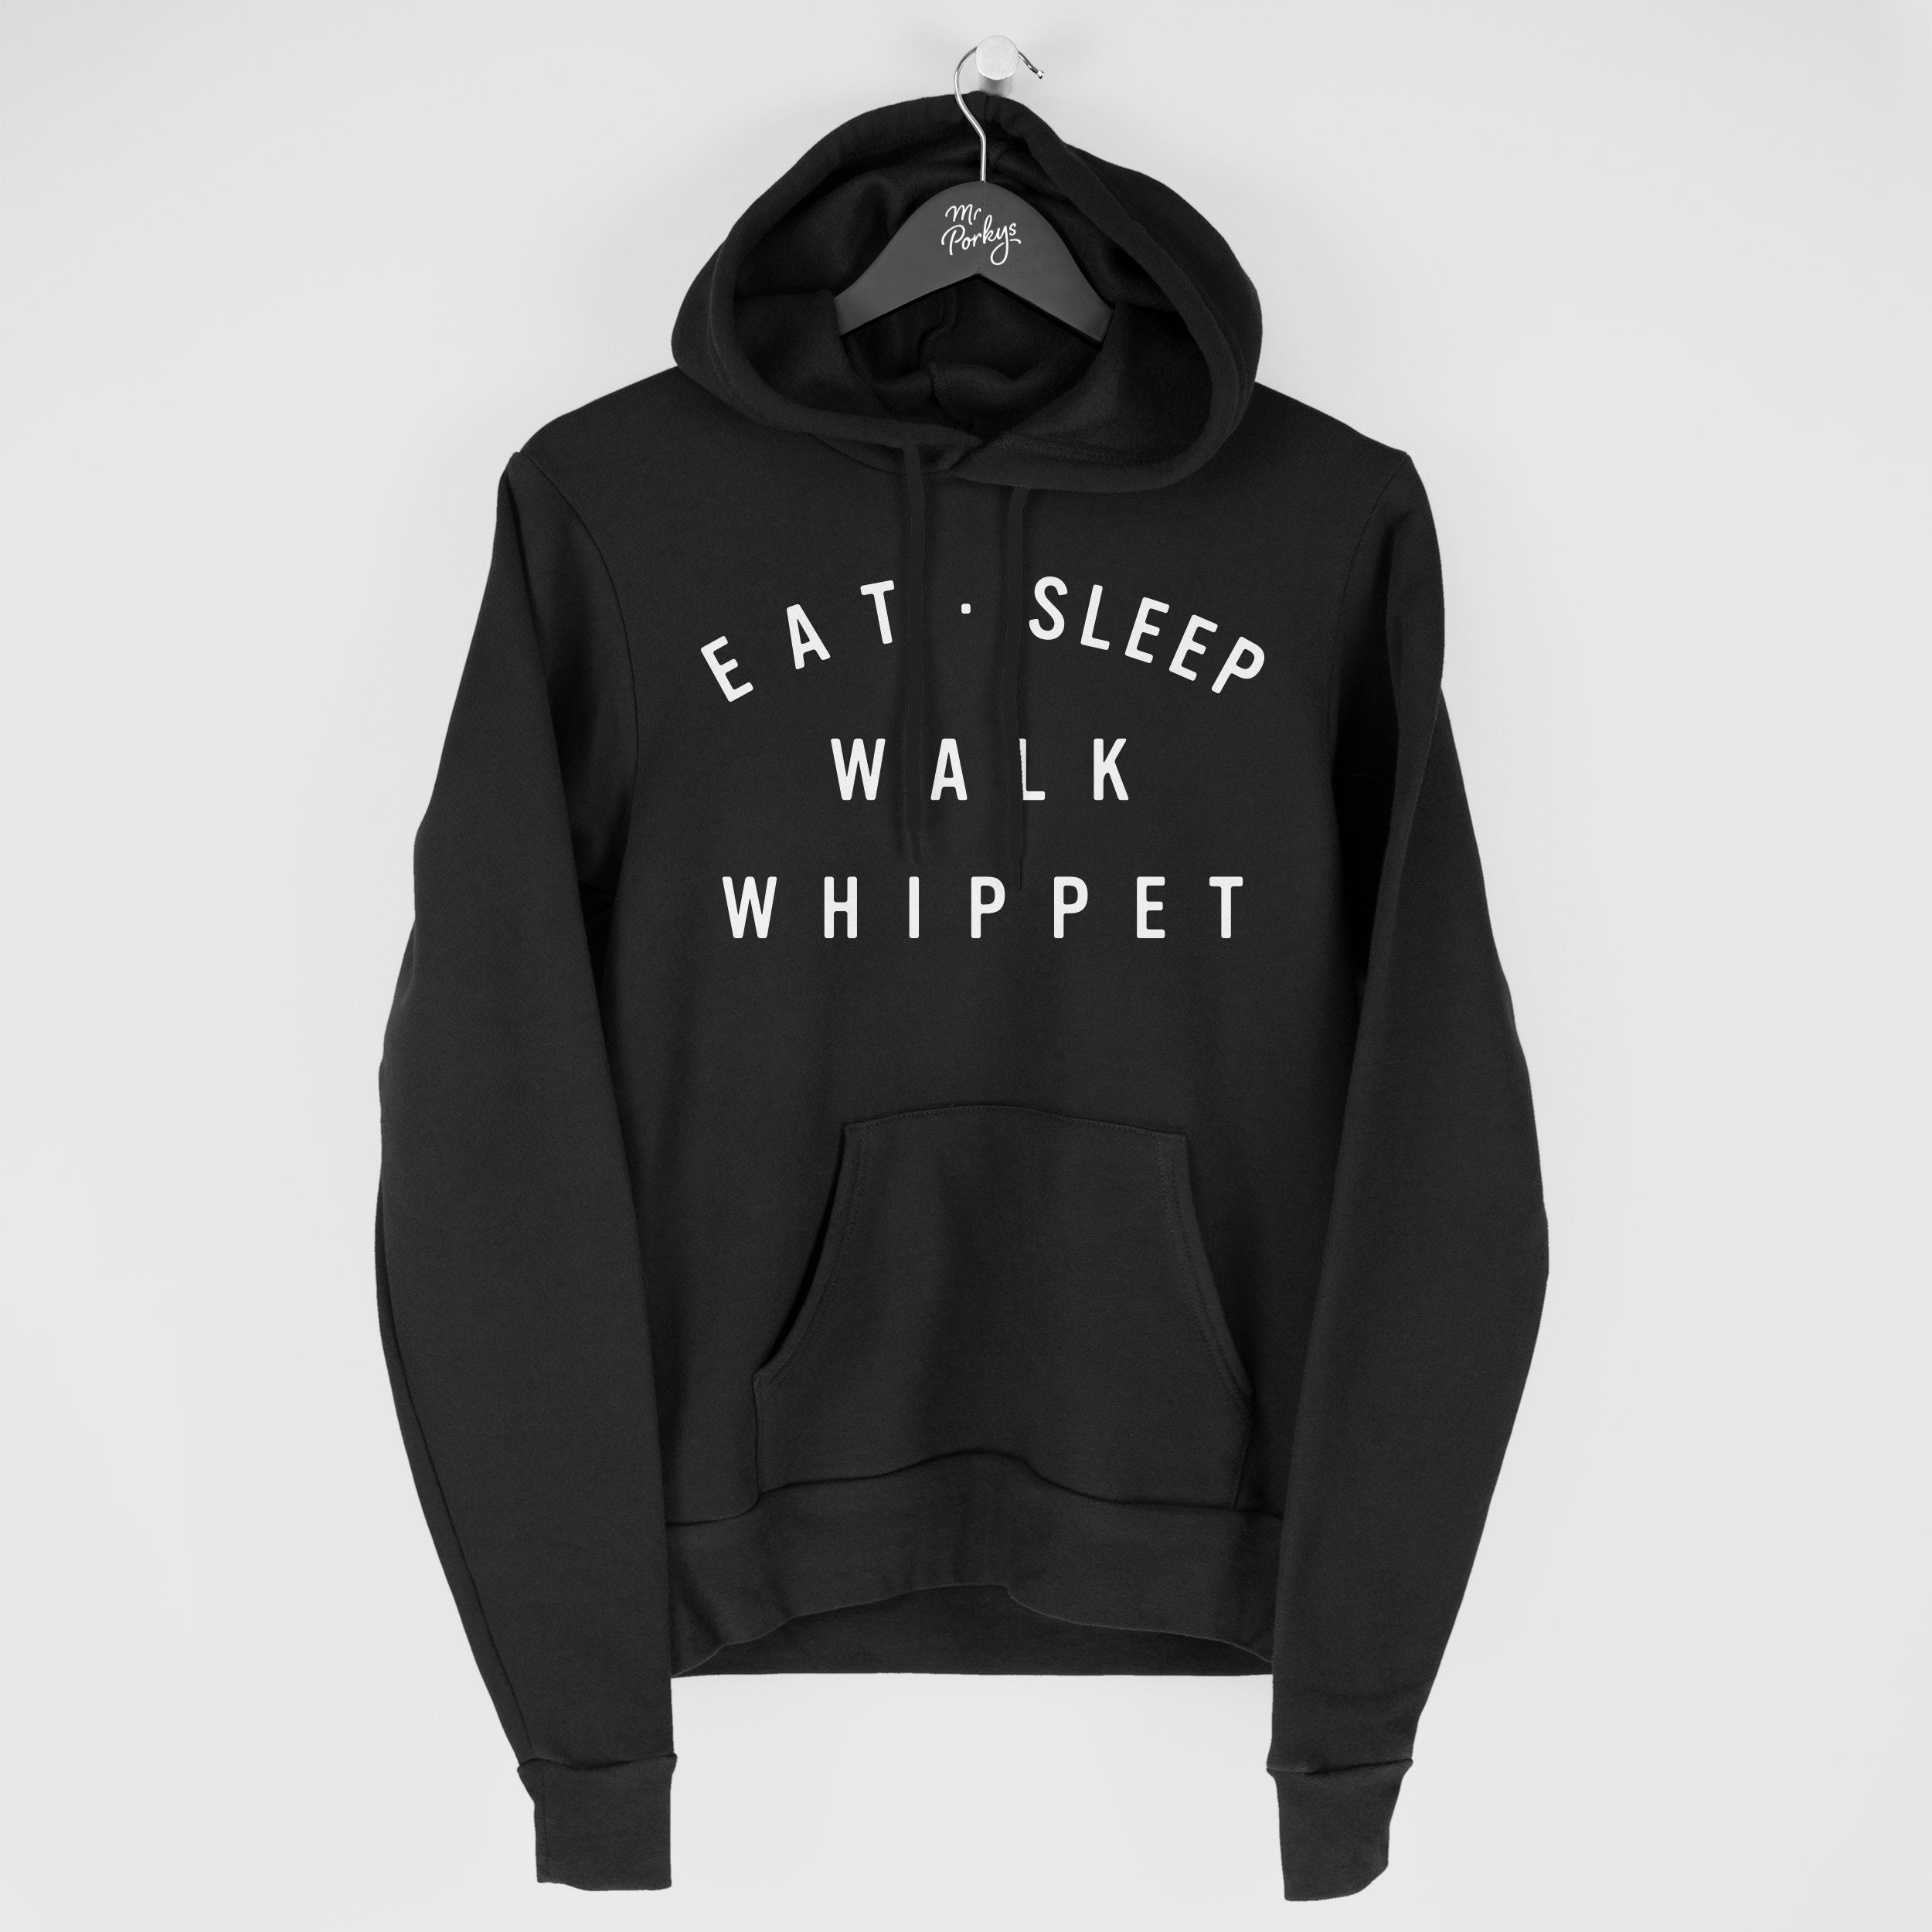 Whippet Hoodie, Eat Sleep Walk Gift For Owner, Hoody